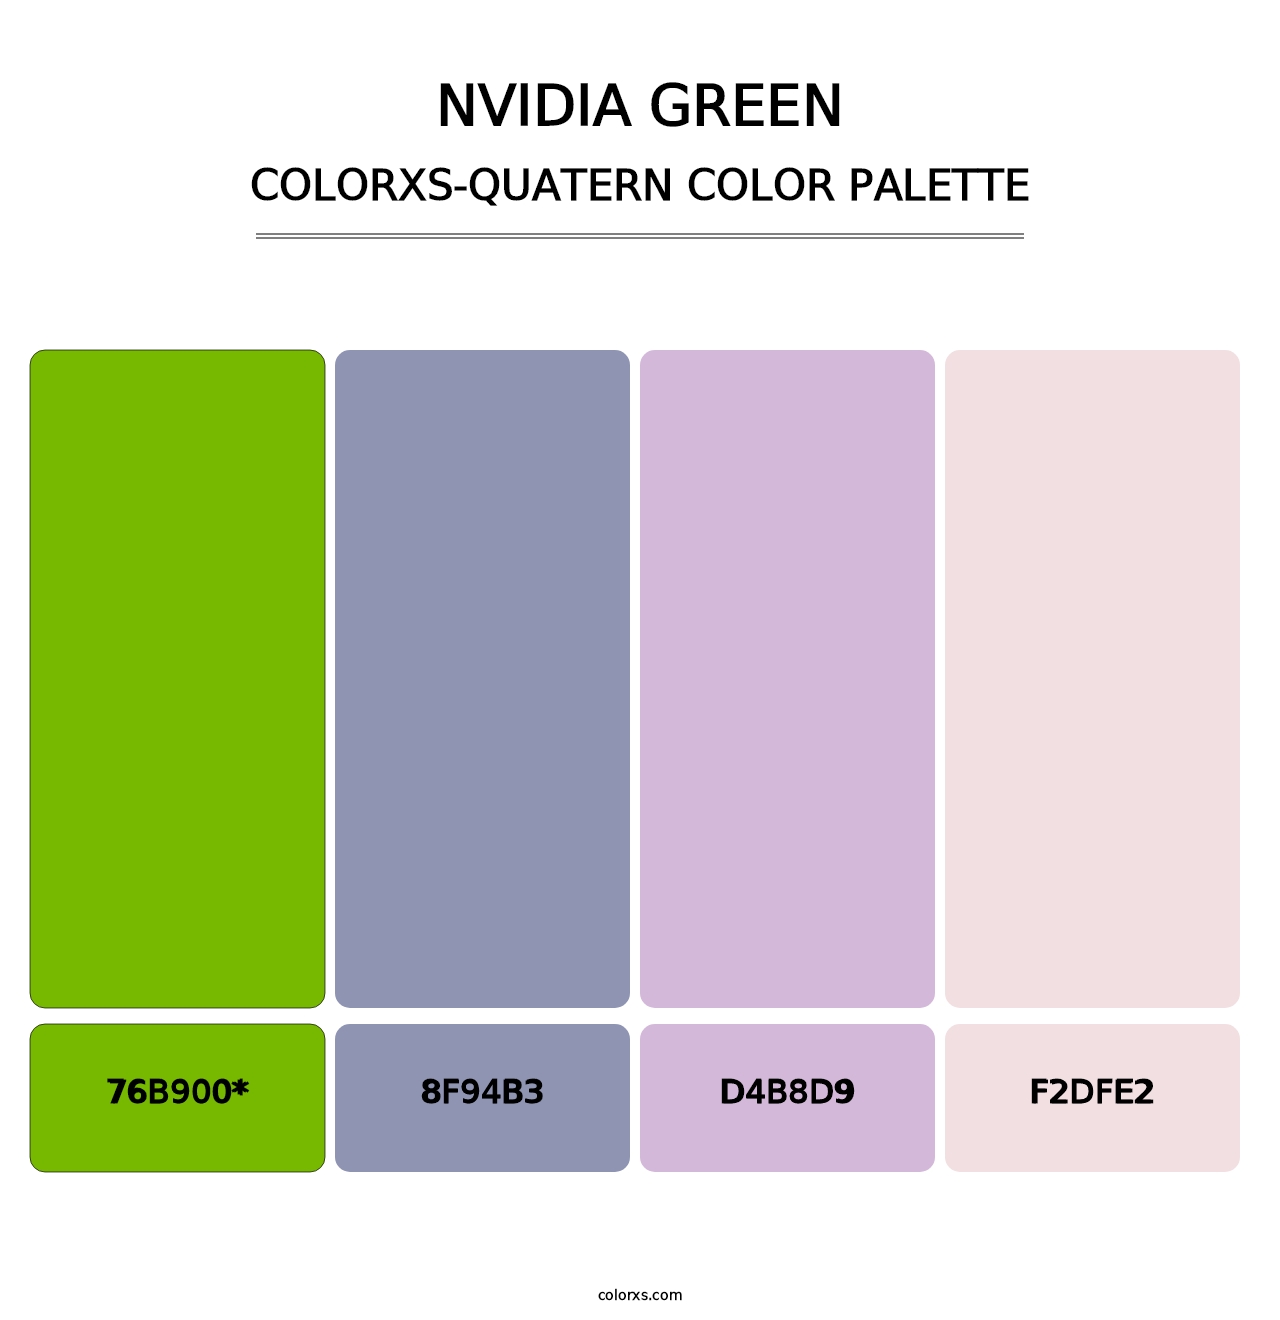 Nvidia Green - Colorxs Quatern Palette